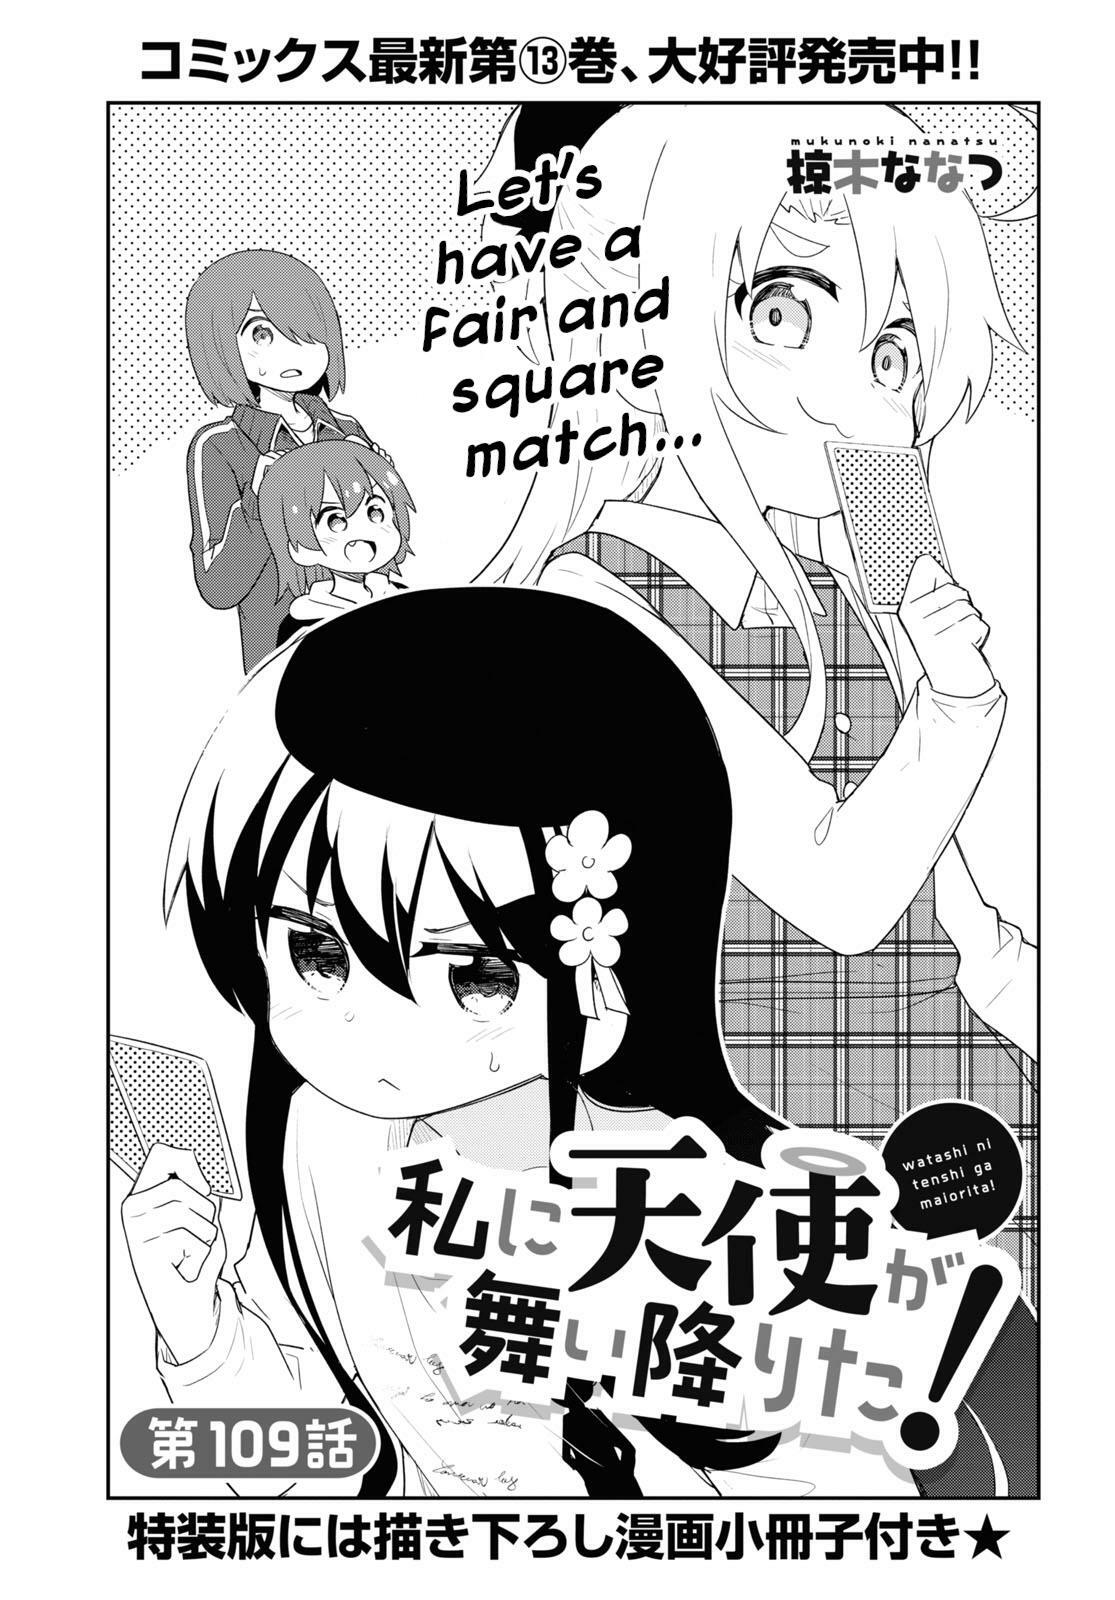 Read Watashi Ni Tenshi Ga Maiorita! Chapter 44 on Mangakakalot